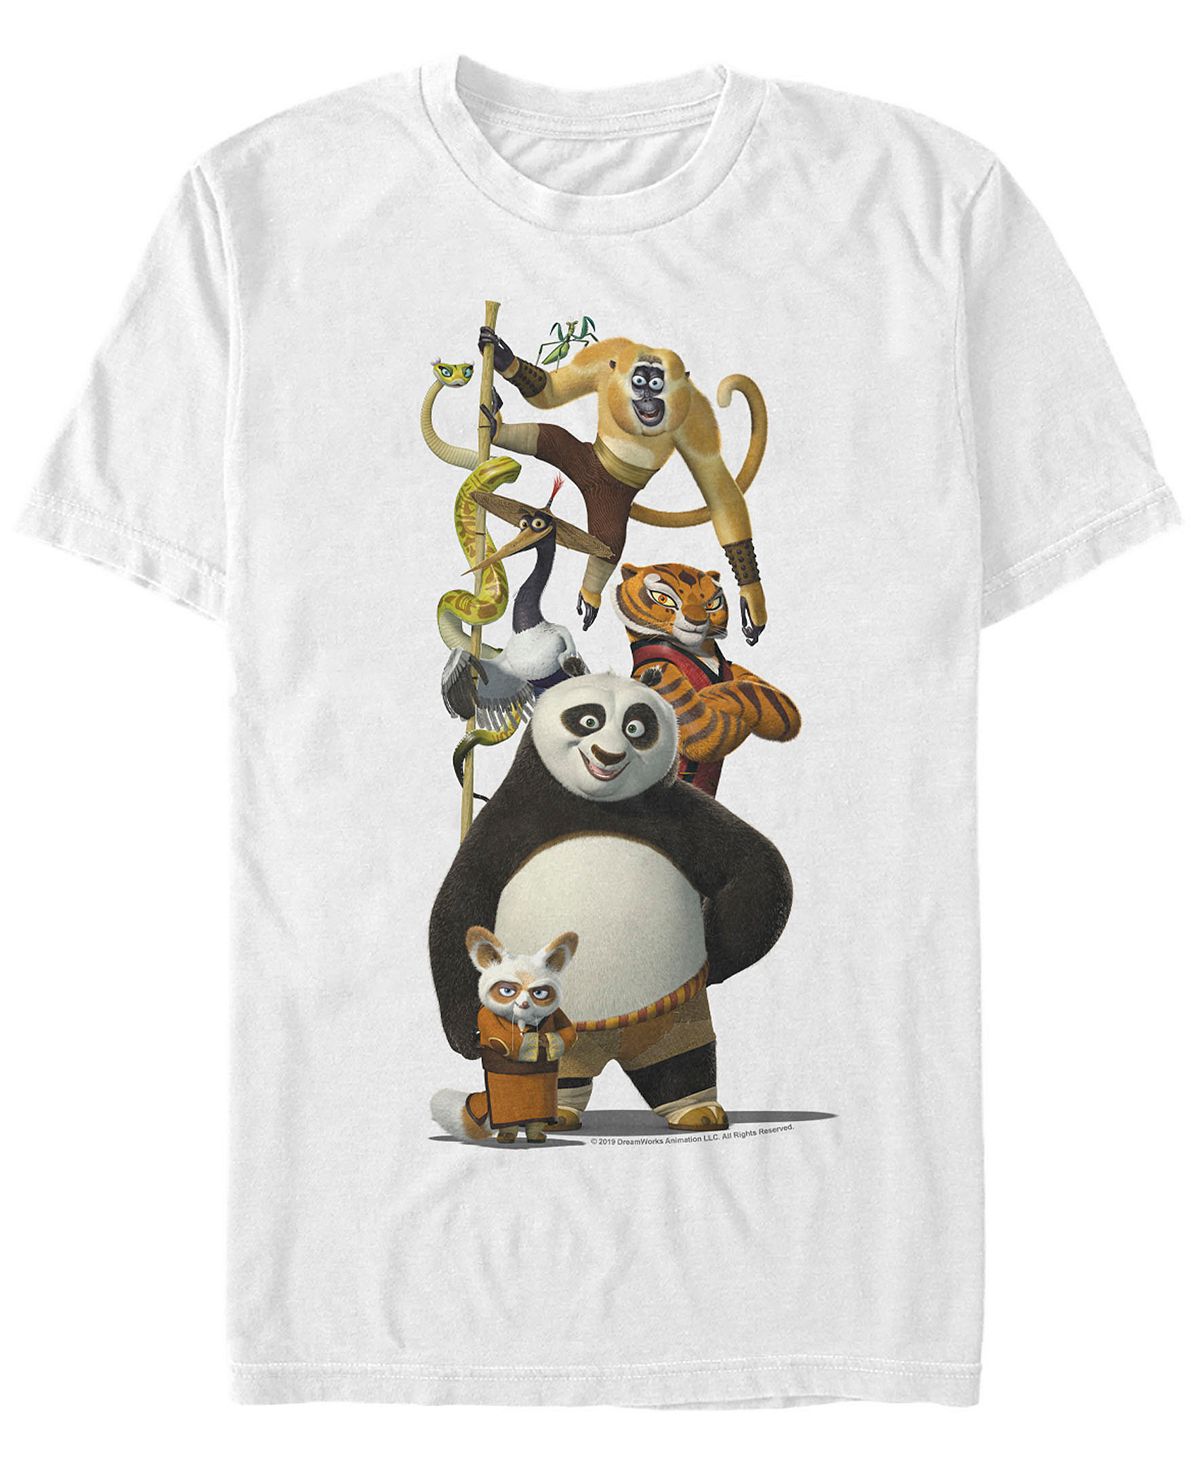 daozong jiugong багуа кунг фу в китайском стиле Мужская футболка с короткими рукавами по и друзья кунг-фу панда Fifth Sun, белый